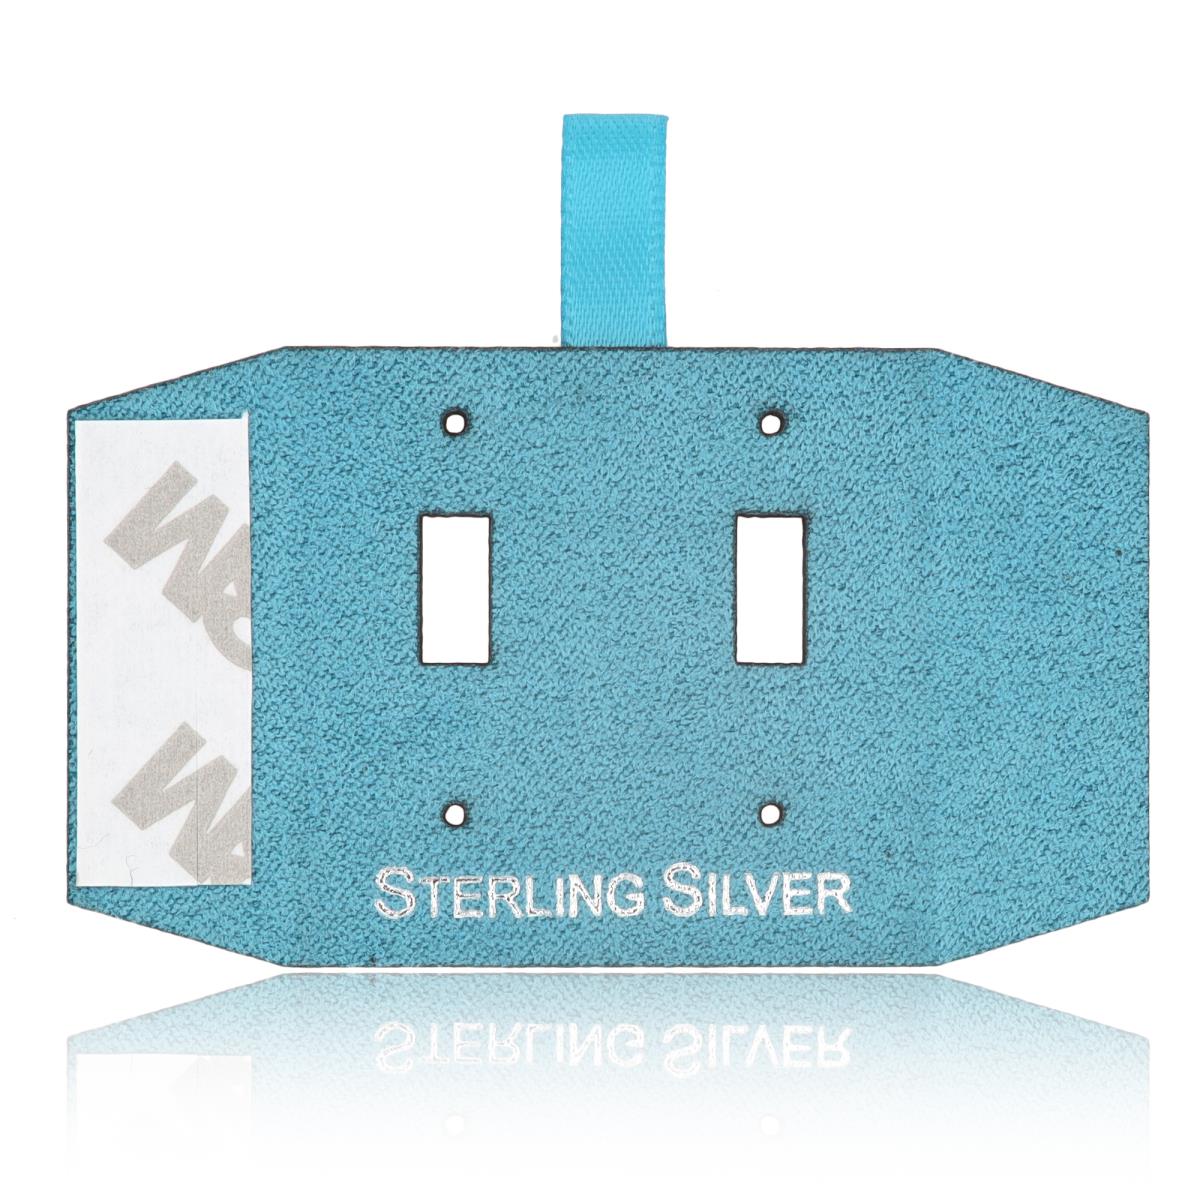 Teal Sterling Silver, Silver Foil Huggie & Stud Insert (Box B06-159/Teal/D)